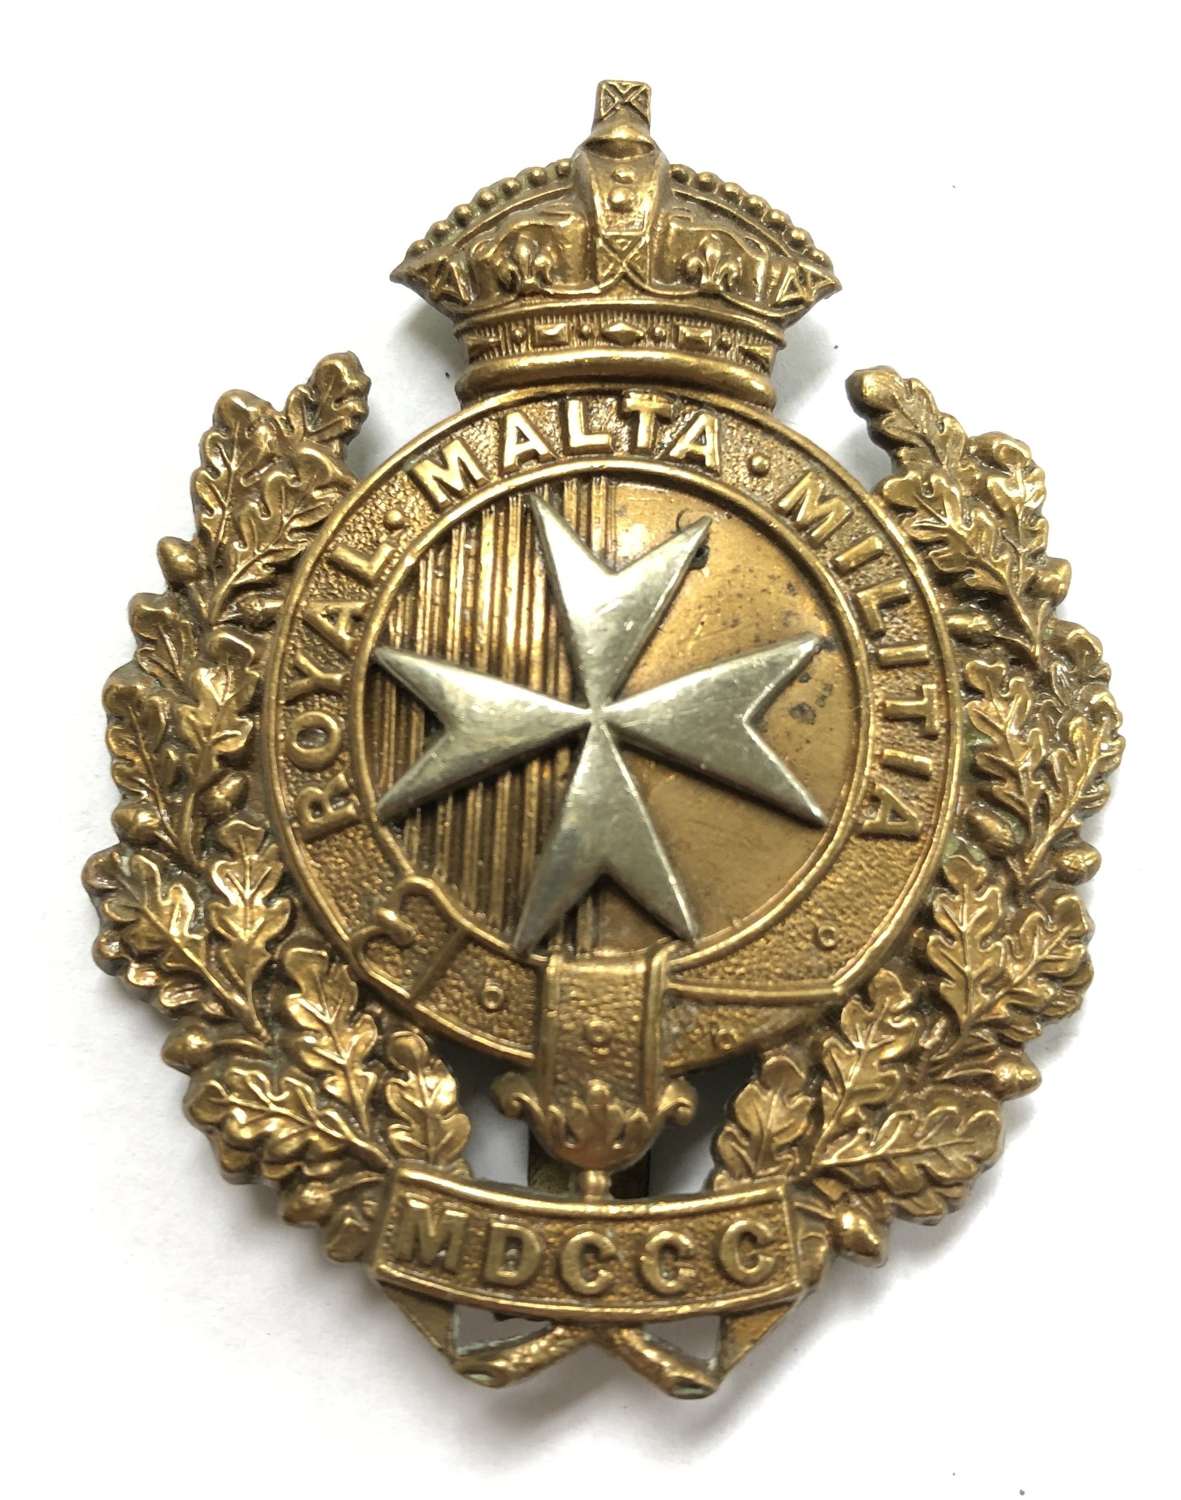 King's Own Malta Regiment of Militia cap badge circa 1889-1903